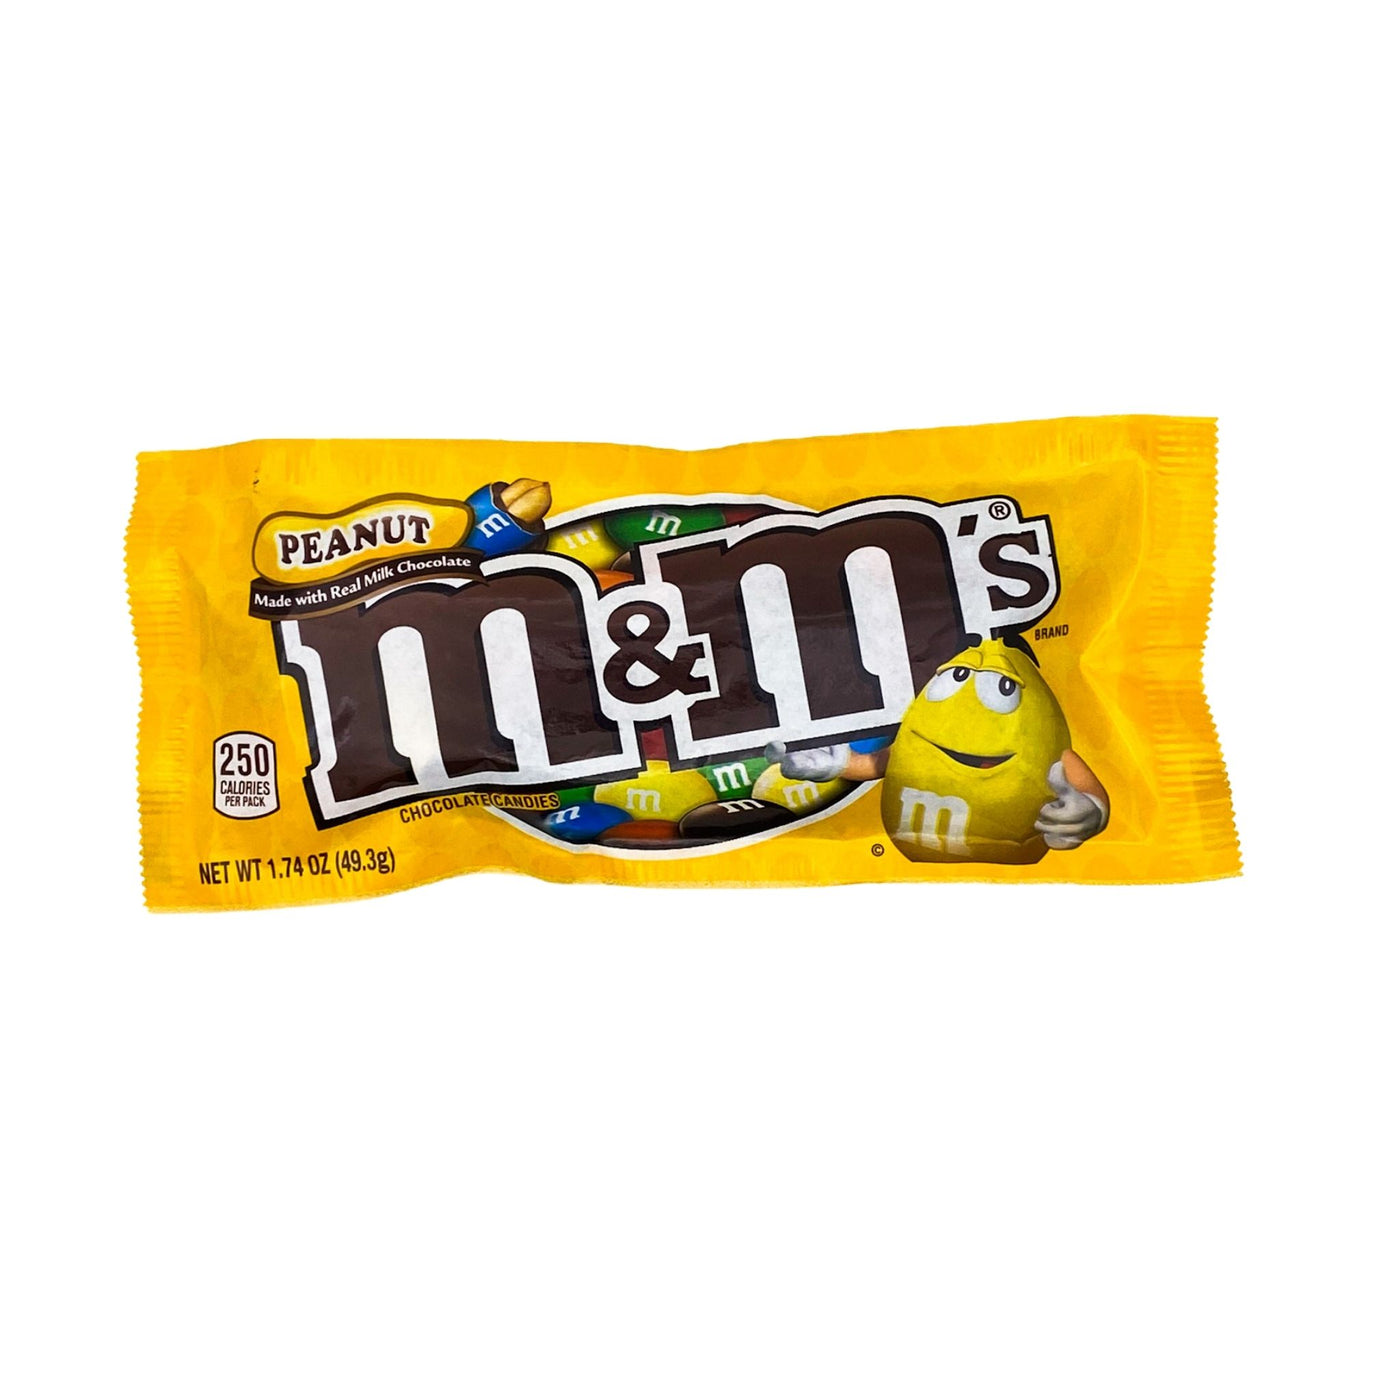  M&M's, Peanut Chocolate, 1.74 oz : M&M'S